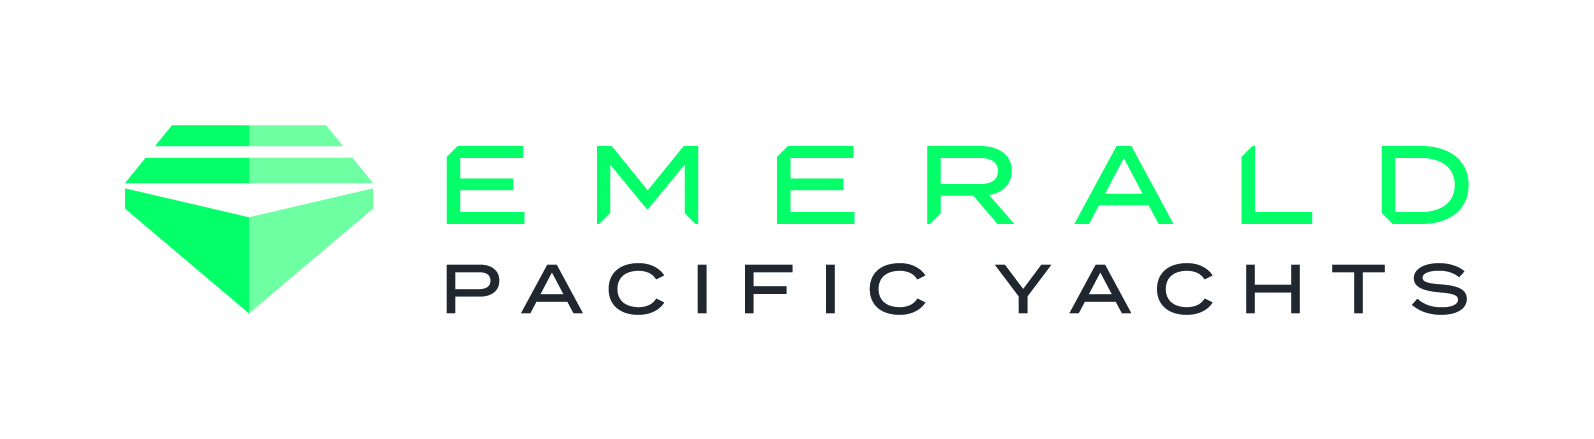 Emerald Pacific Yachts Logo